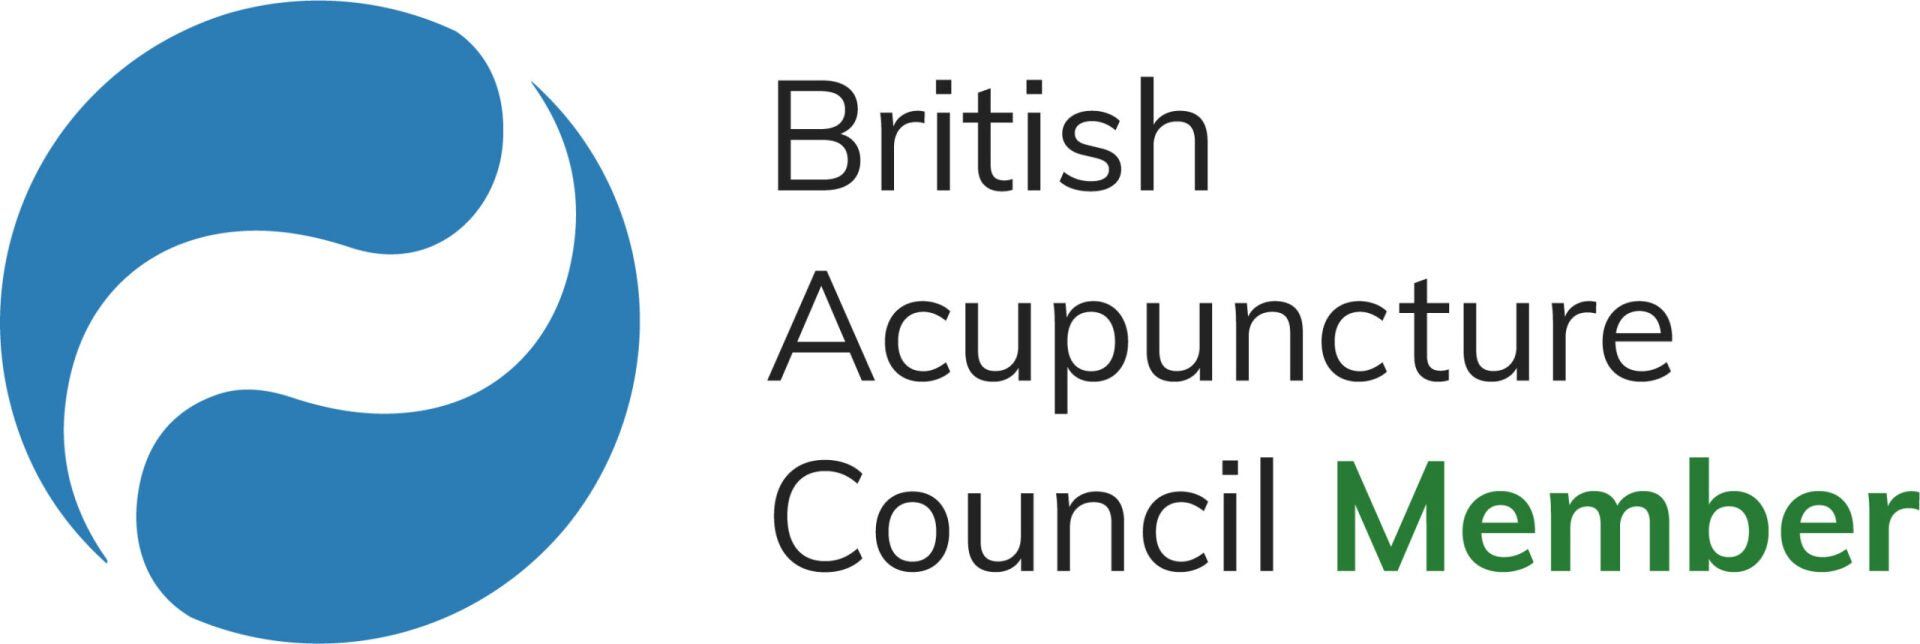 British Acupuncture Council's Logo